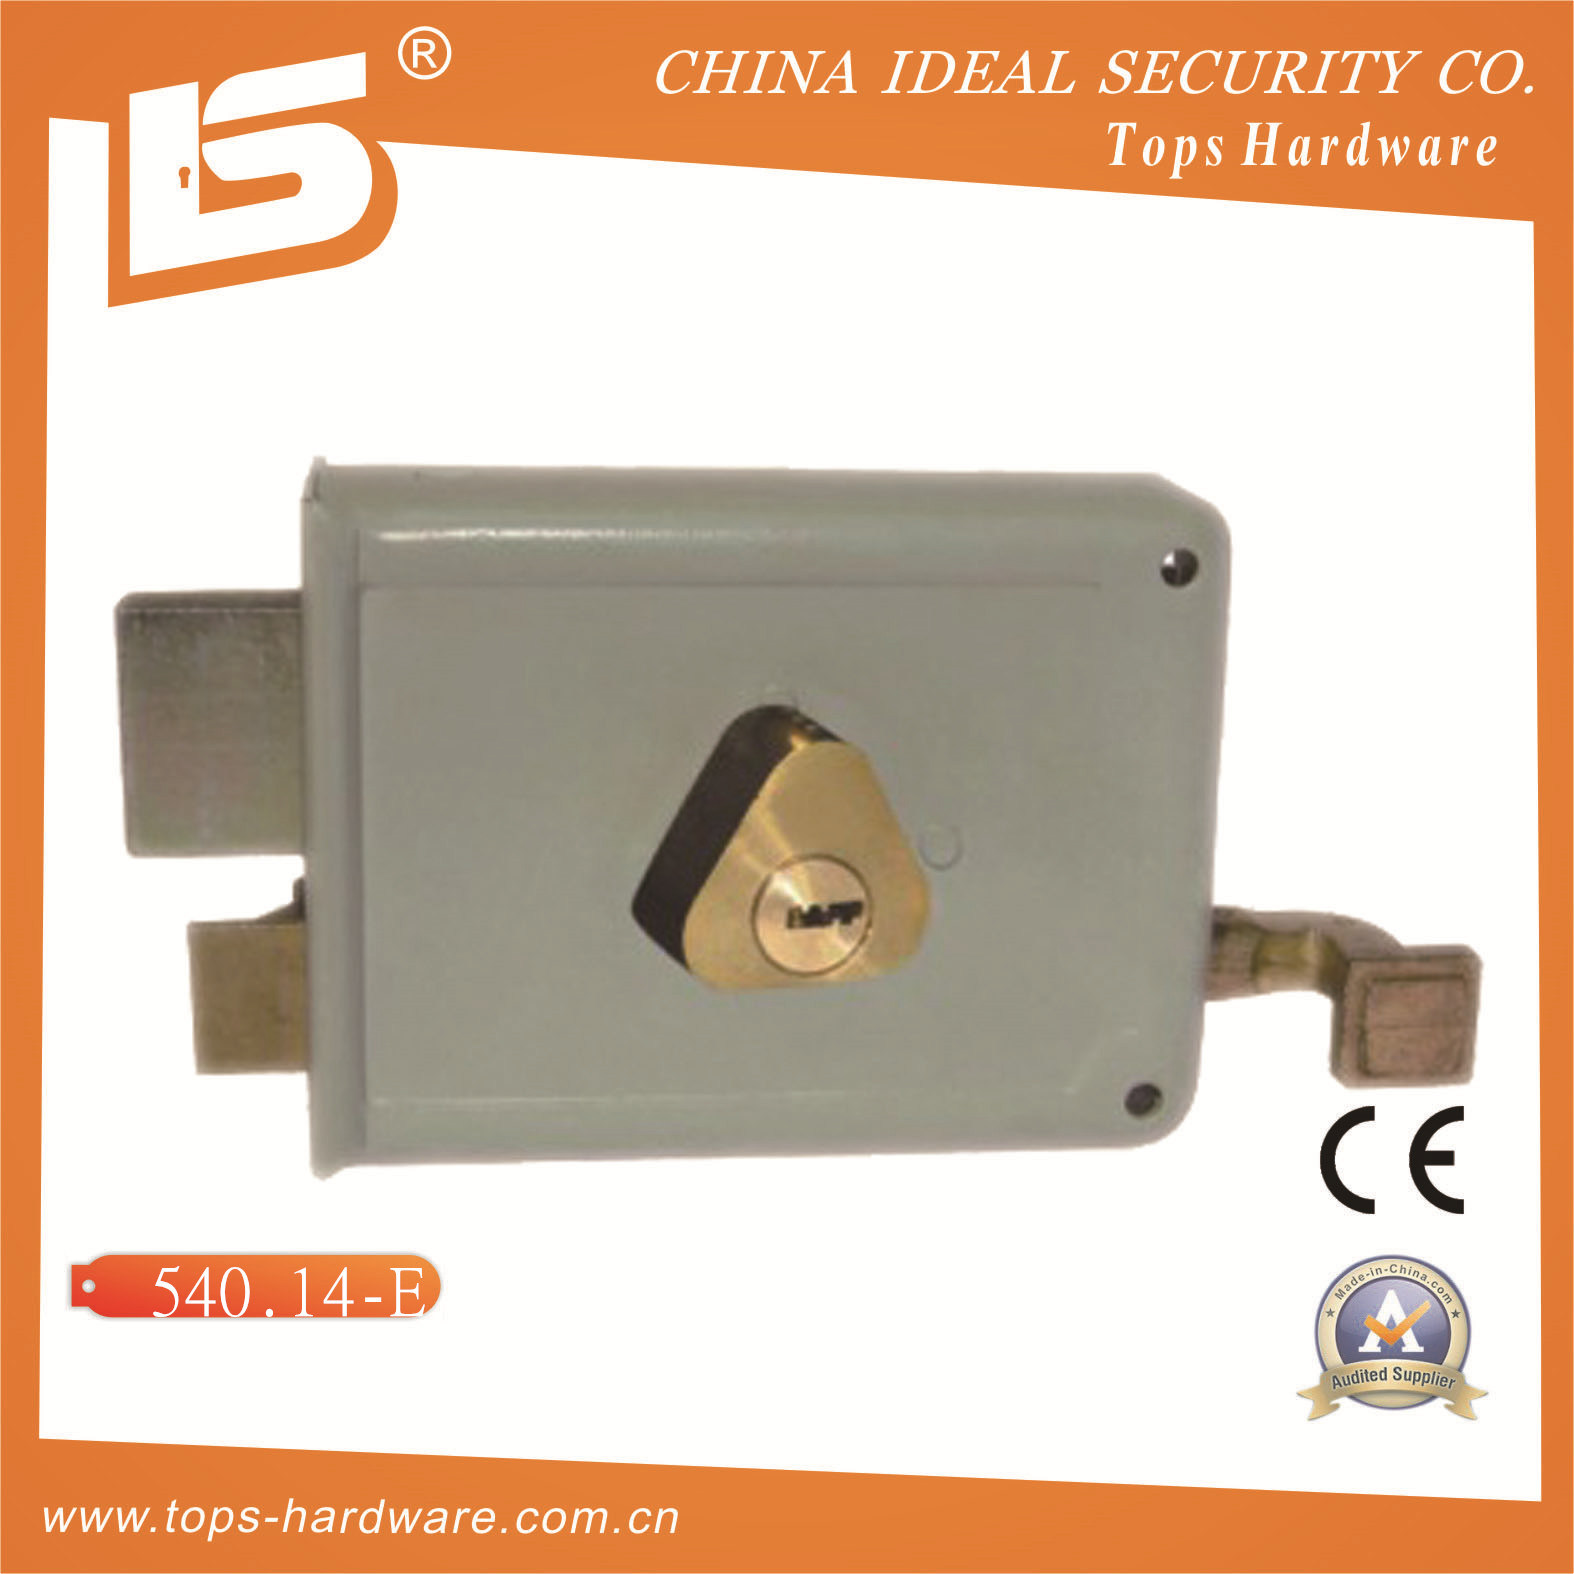 Security High Quality Door Rim Lock (540.14-E)